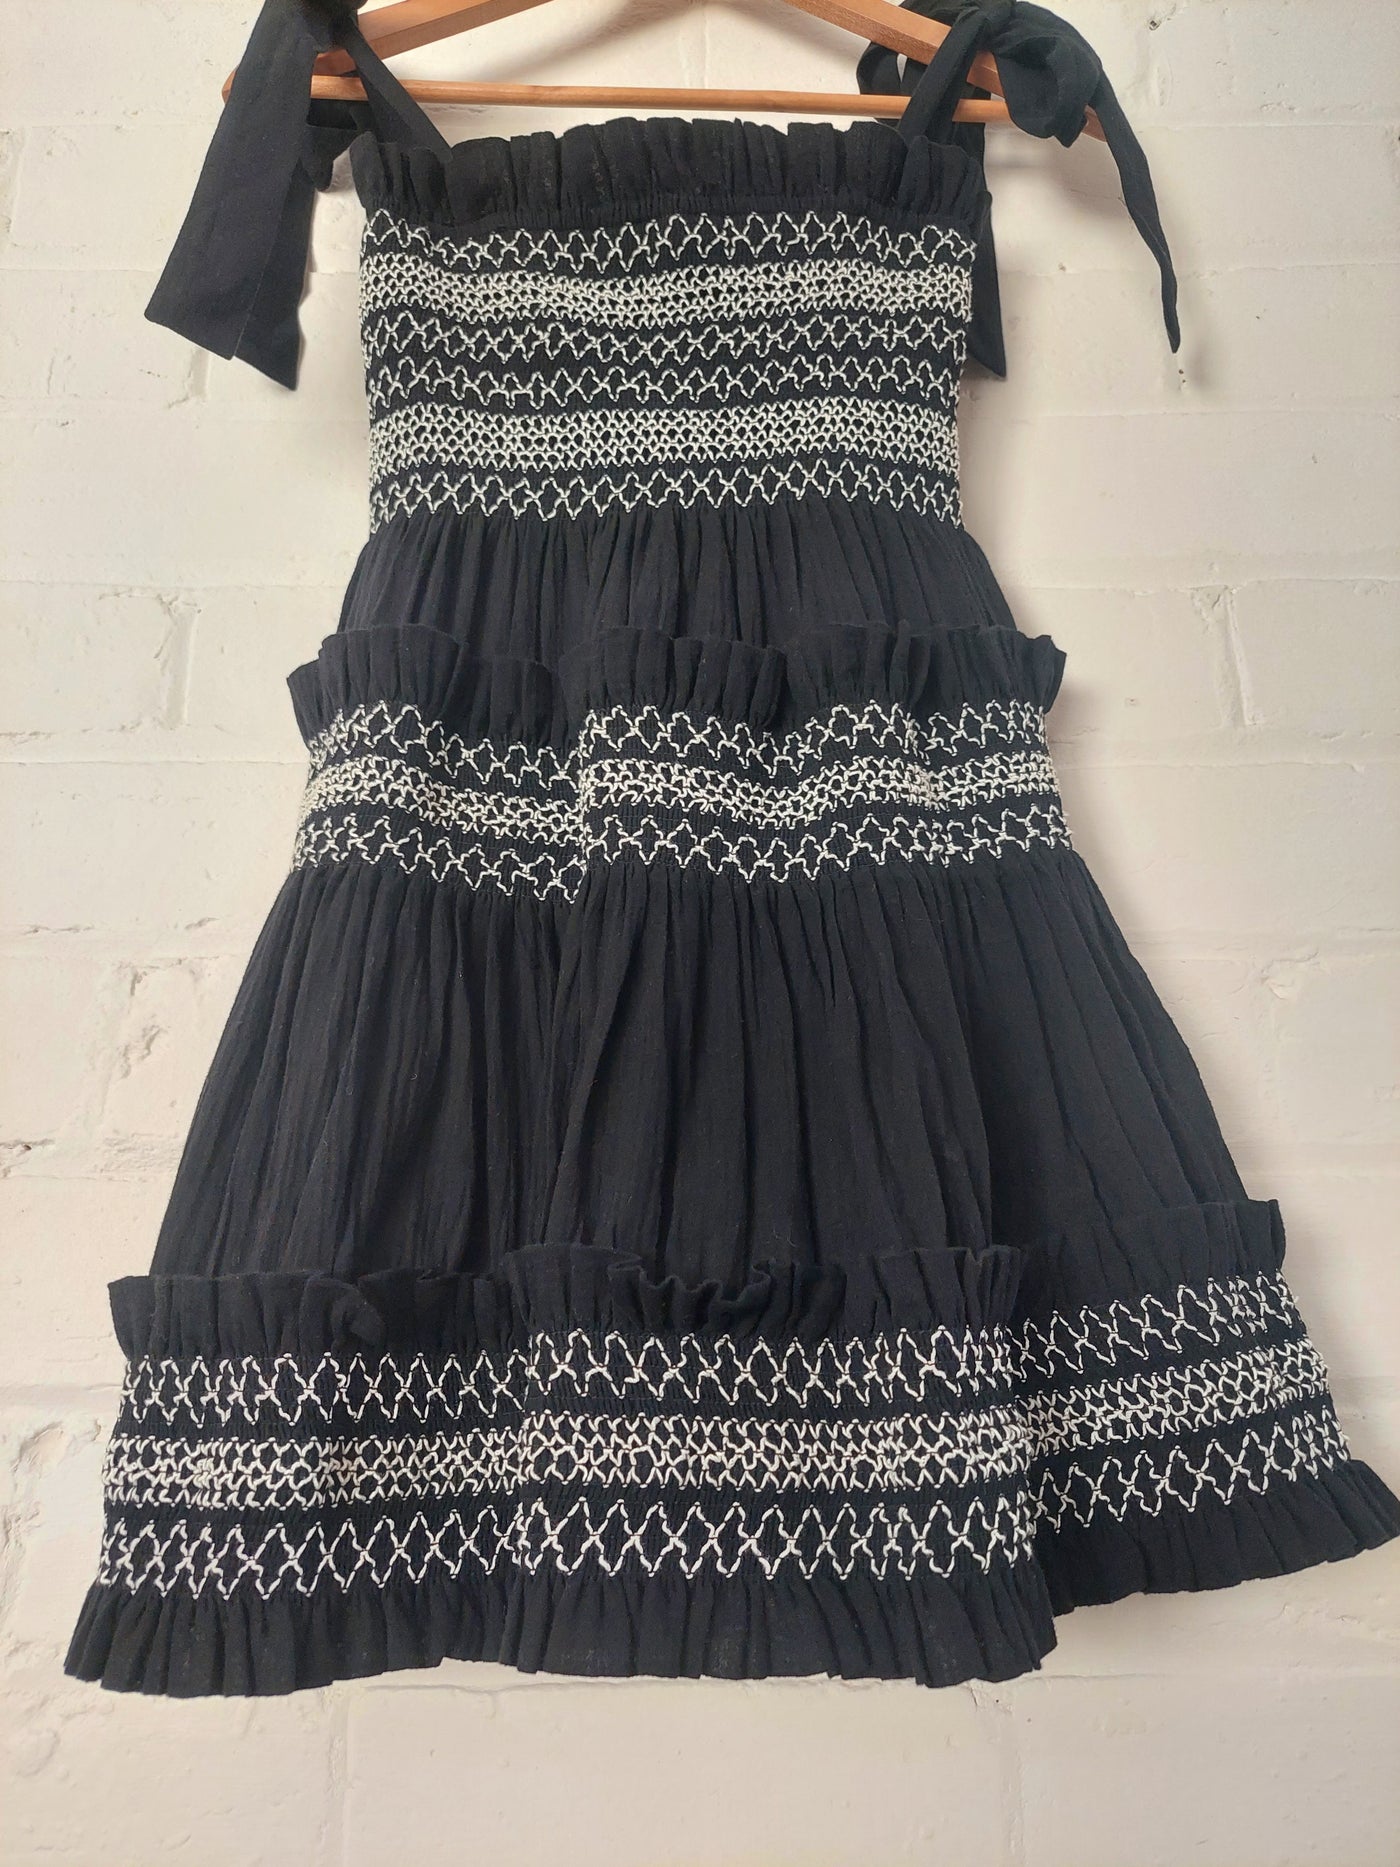 Shona Joy 'Leda' Shirred Cotton Mini Dress - Black / White, Size 8